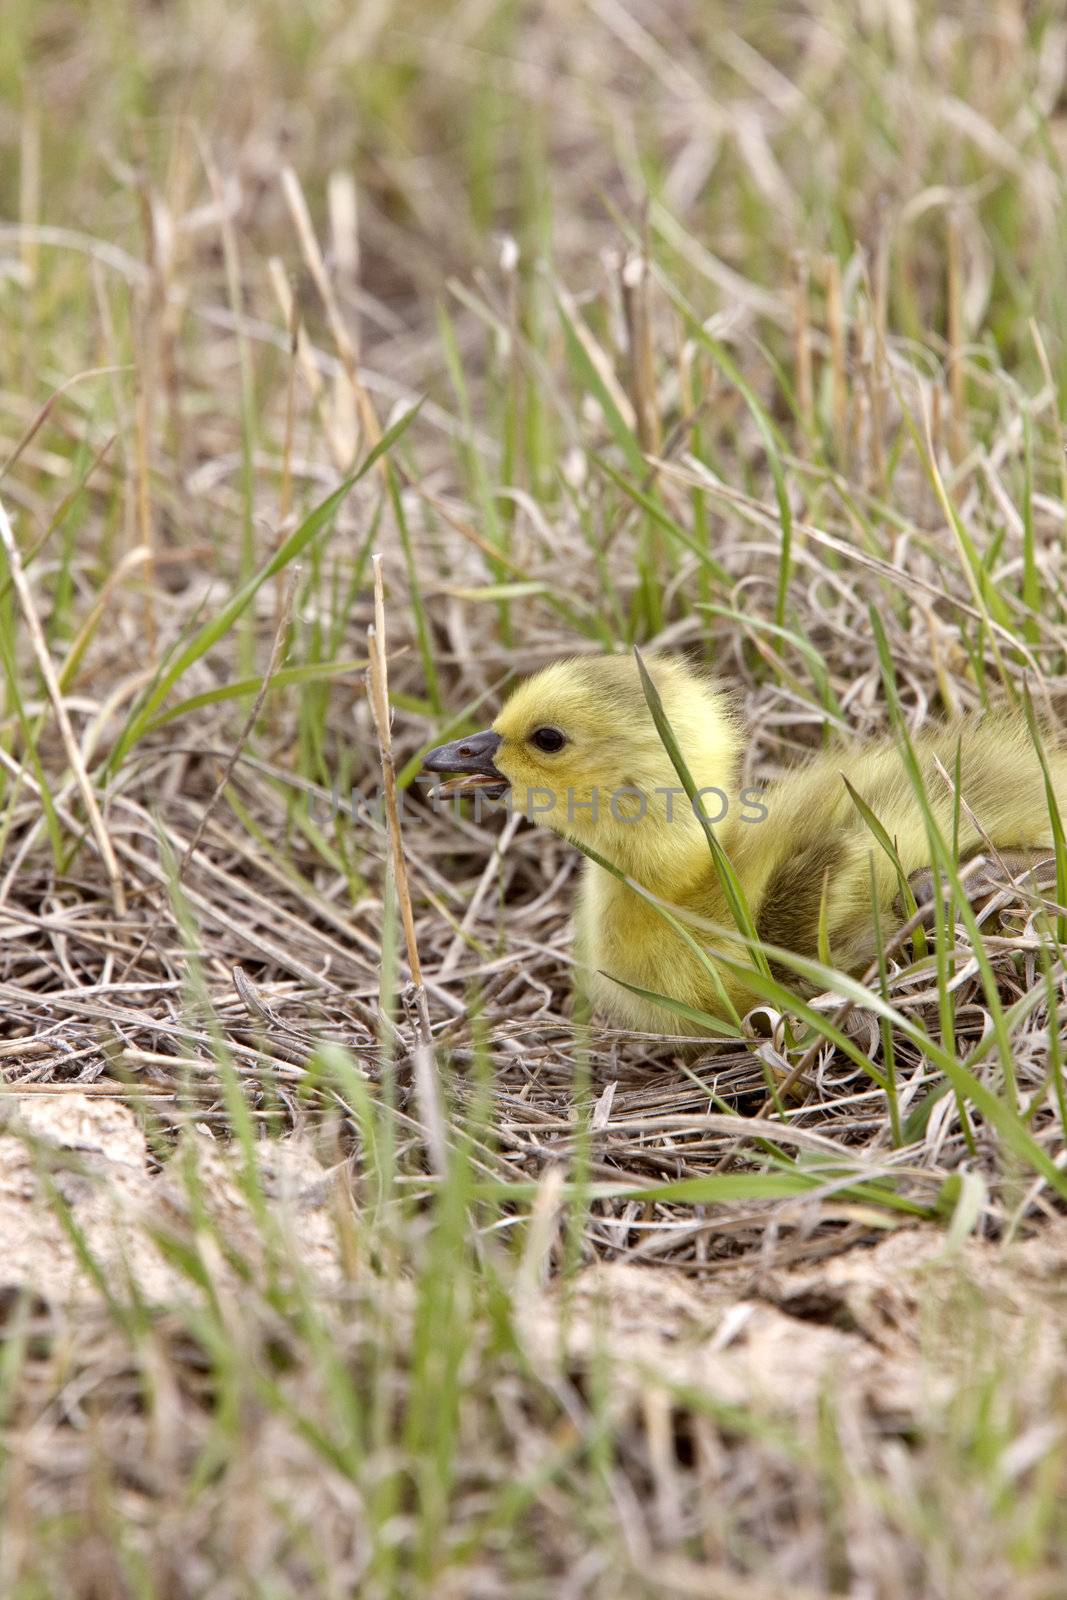 Baby Geese Goslings in Grass Saskatchewan by pictureguy